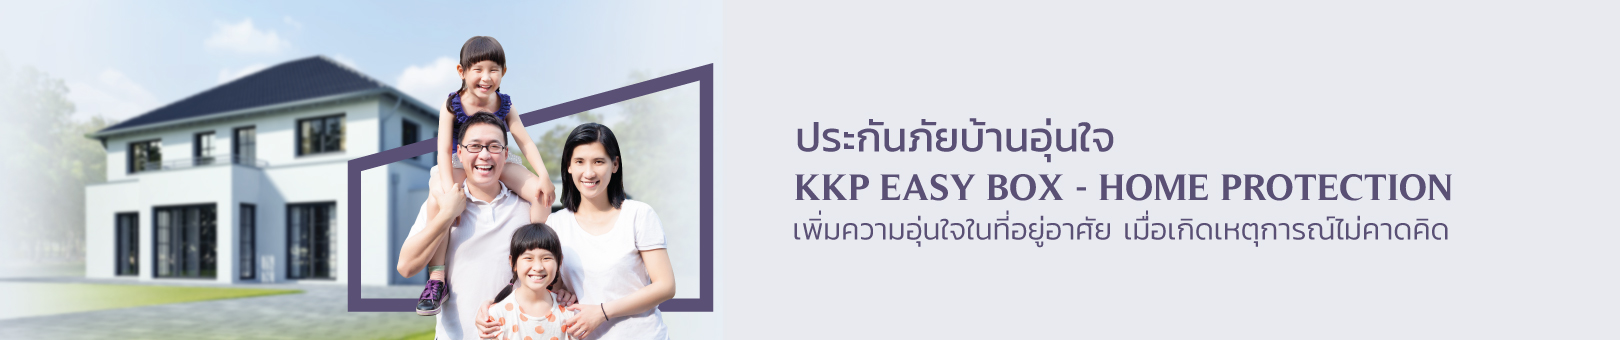 KKP-EASY-BOX-HOME-PROTECTION_Web_1620x340